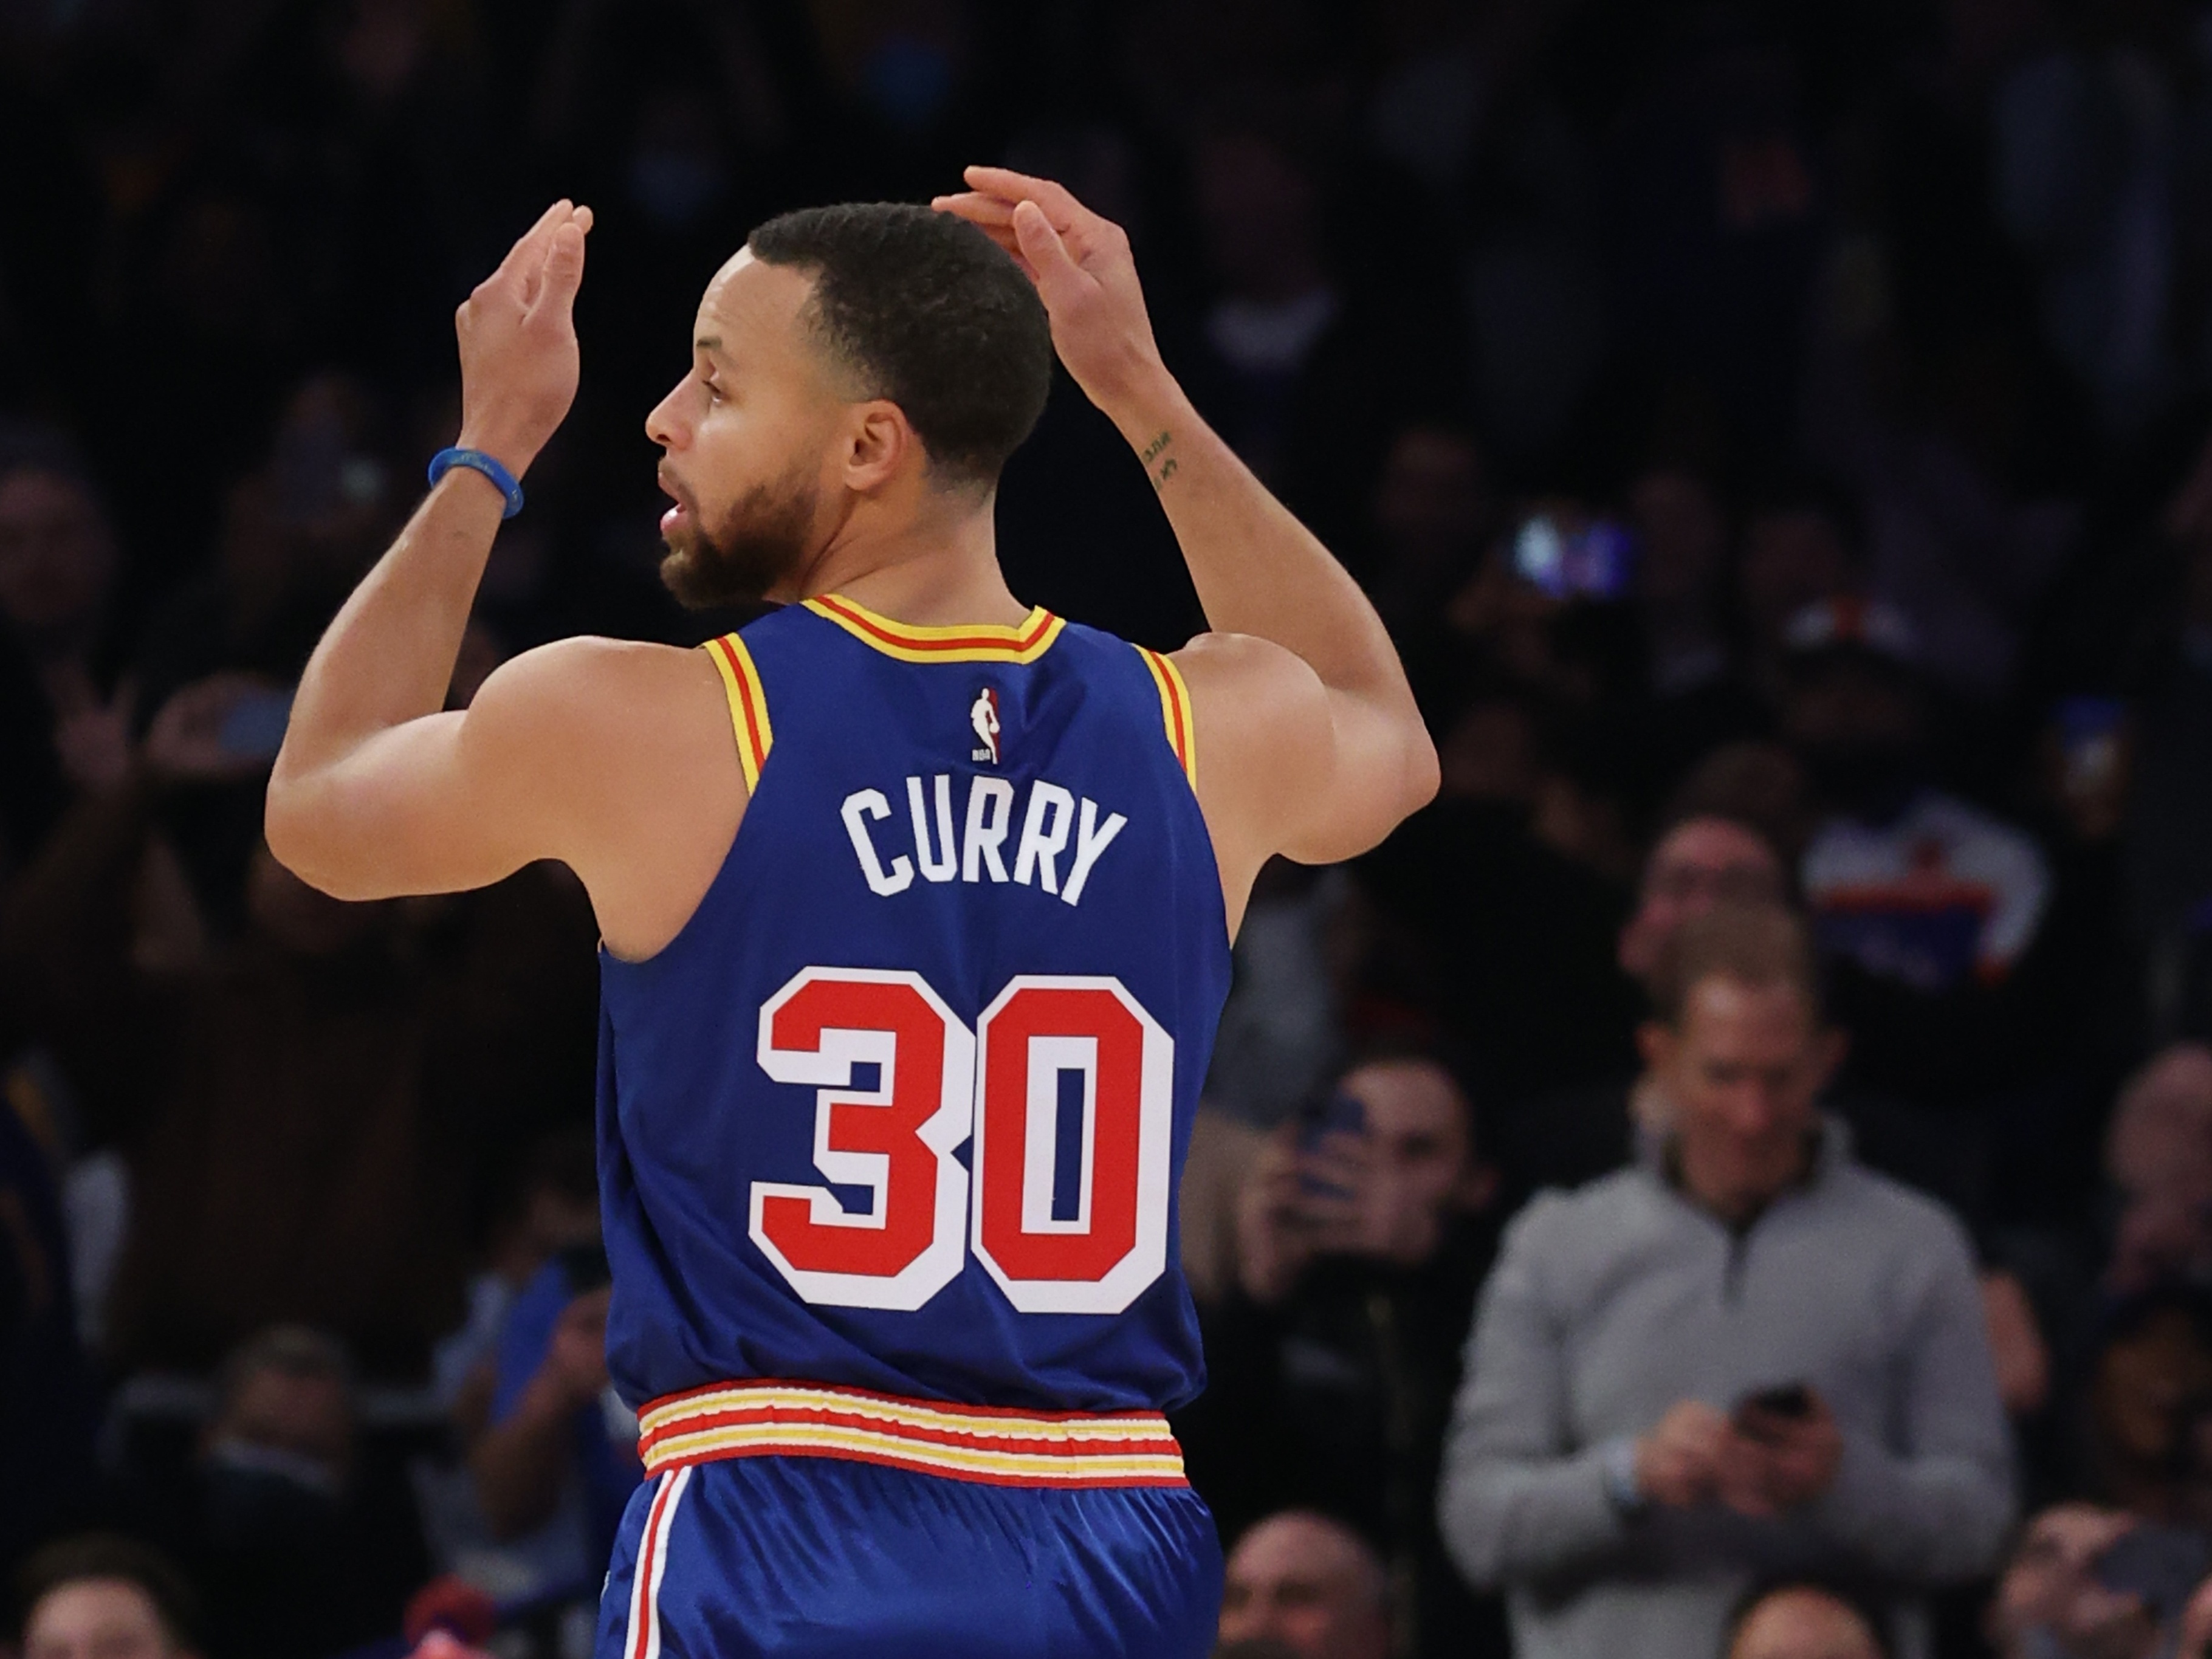 Analista detalha impacto de Stephen Curry no Warriors e na NBA